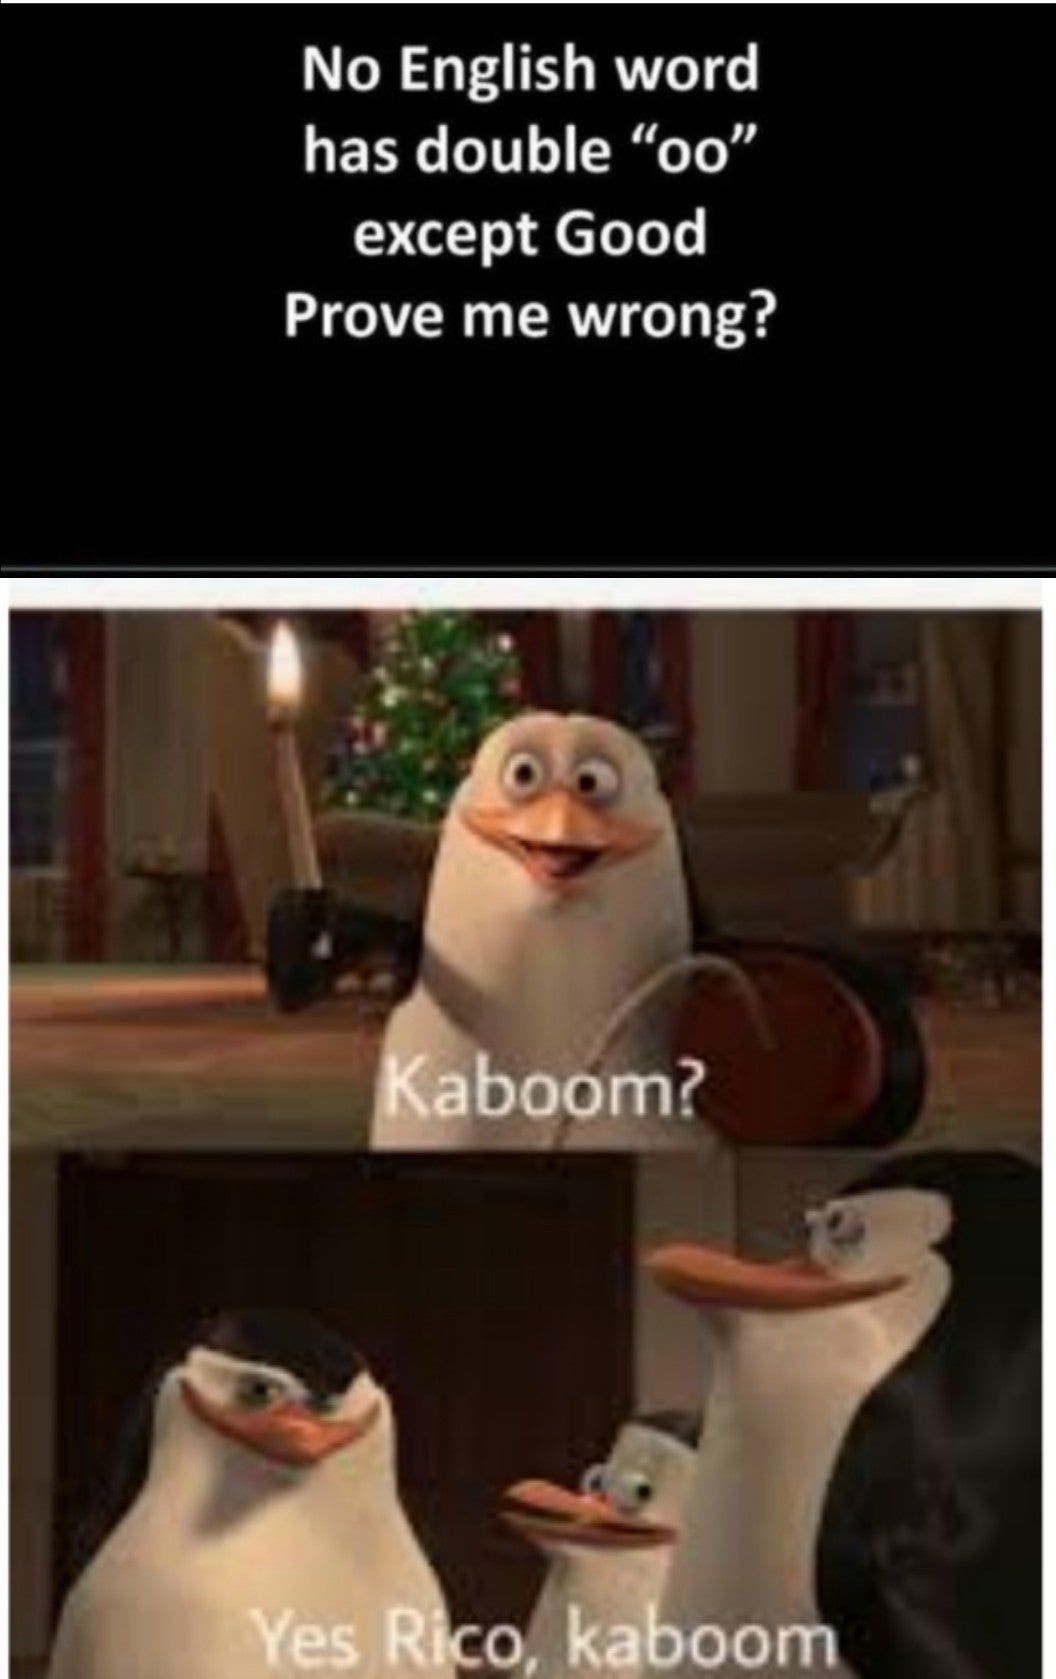 Kaboom yes